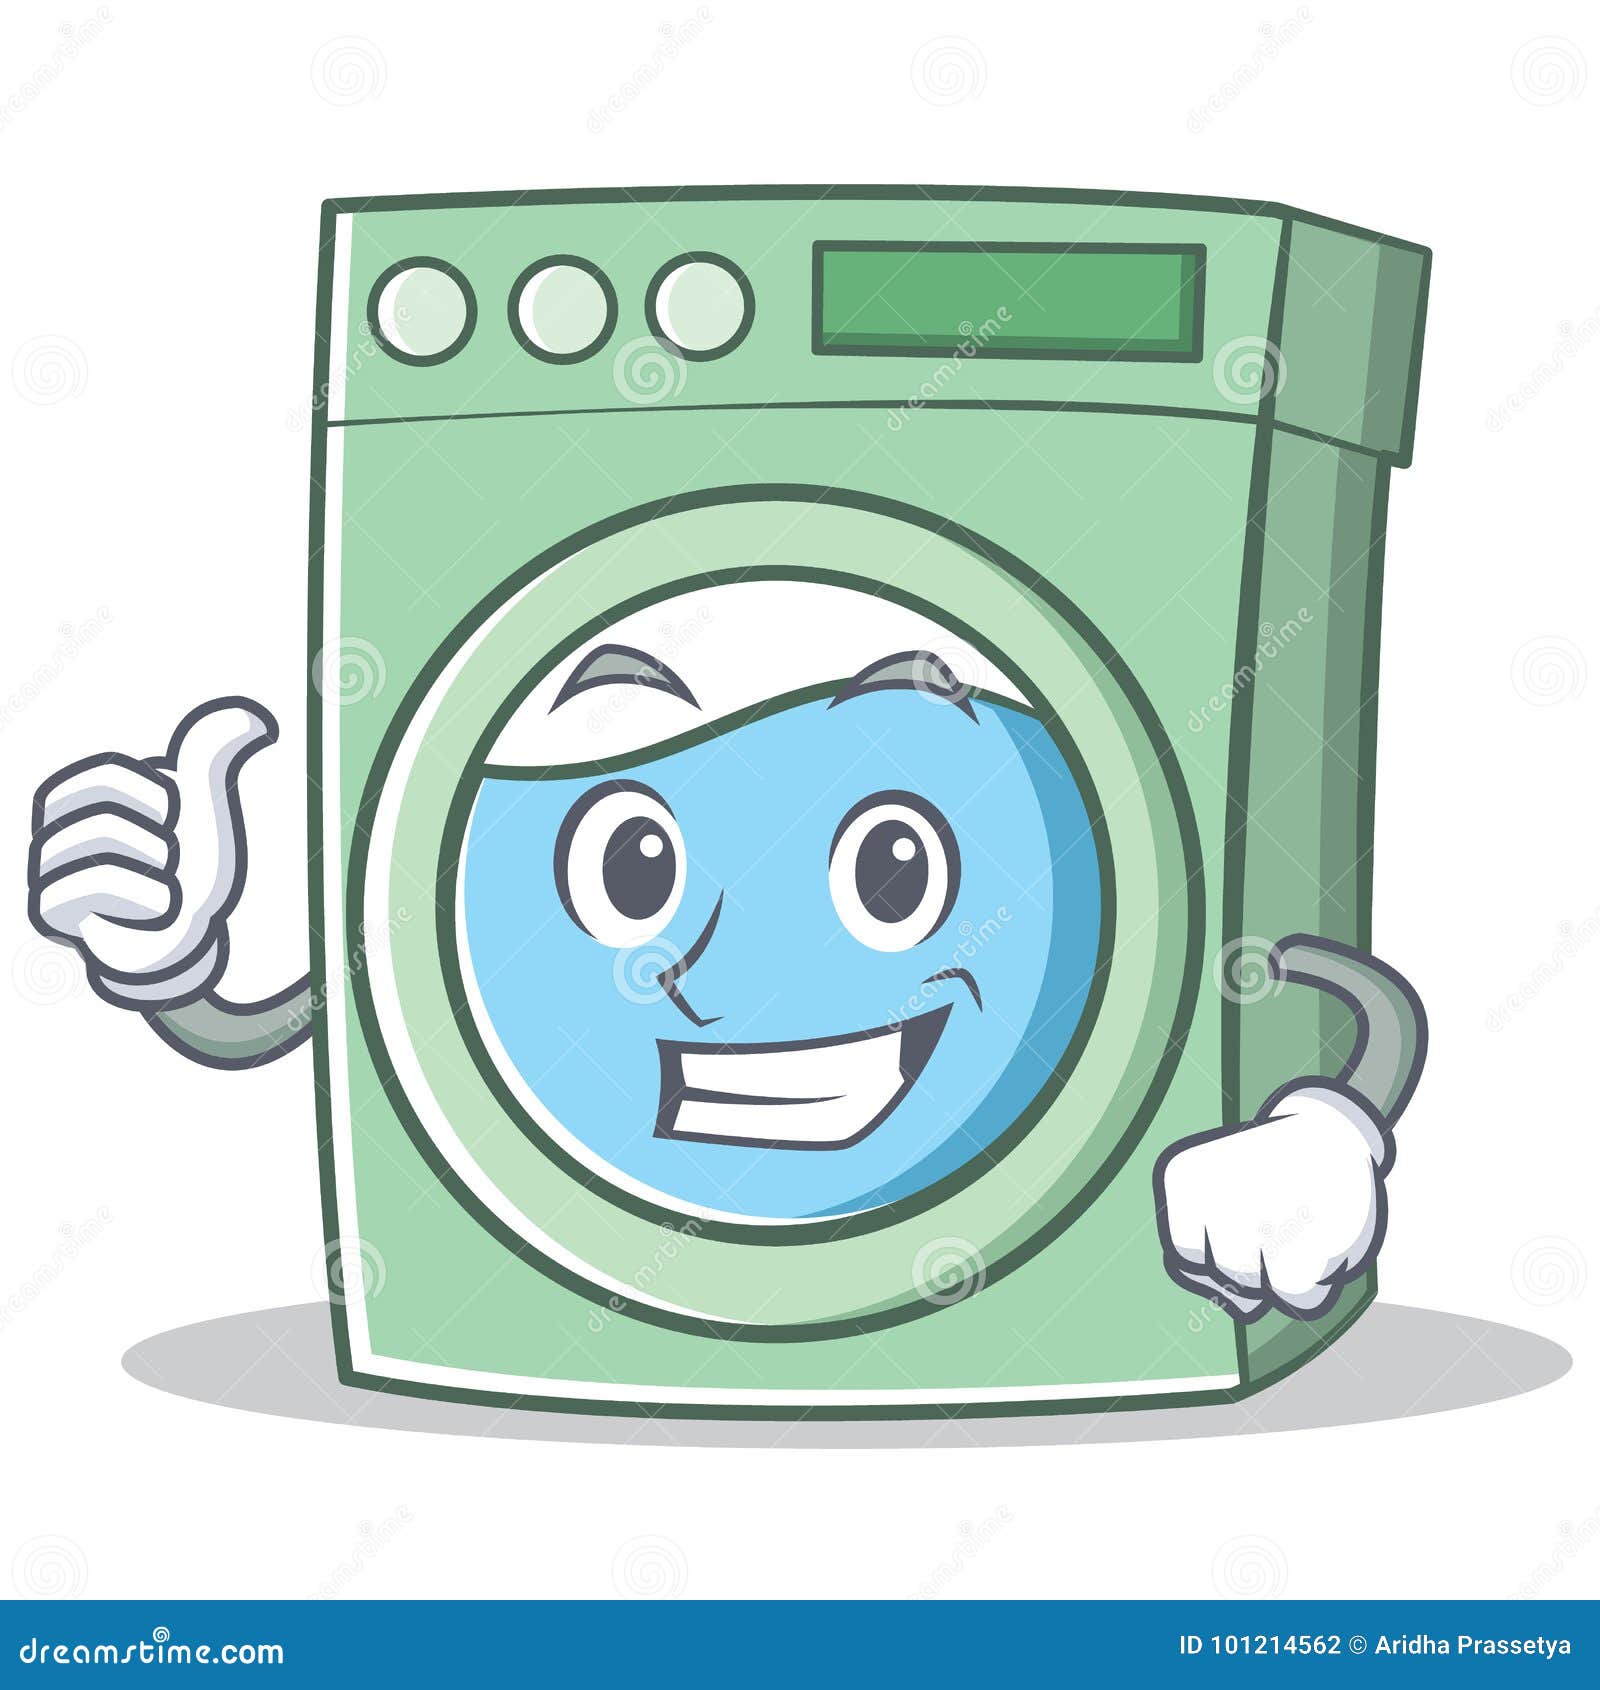 FREE! - Washing Machine Colouring Sheet - Twinkl